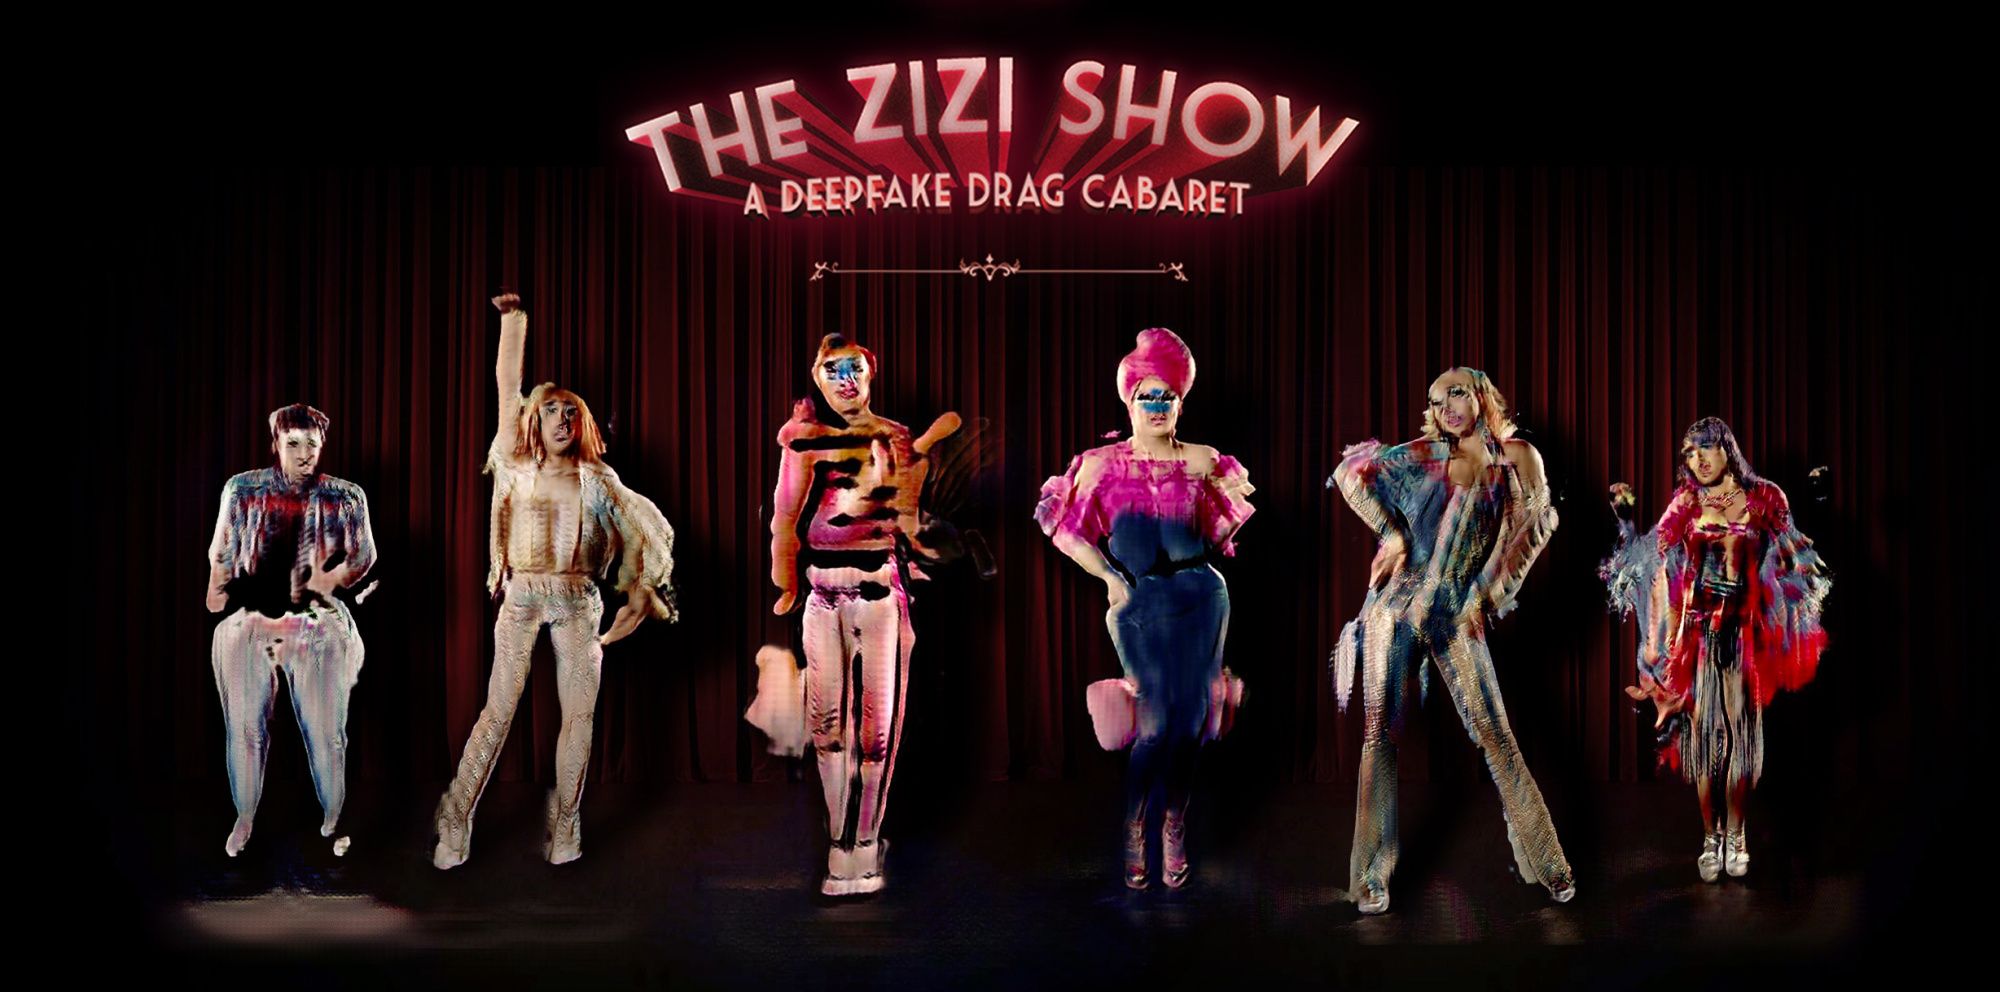 The Zizi Show, 2020, montage of deepfake drag artists